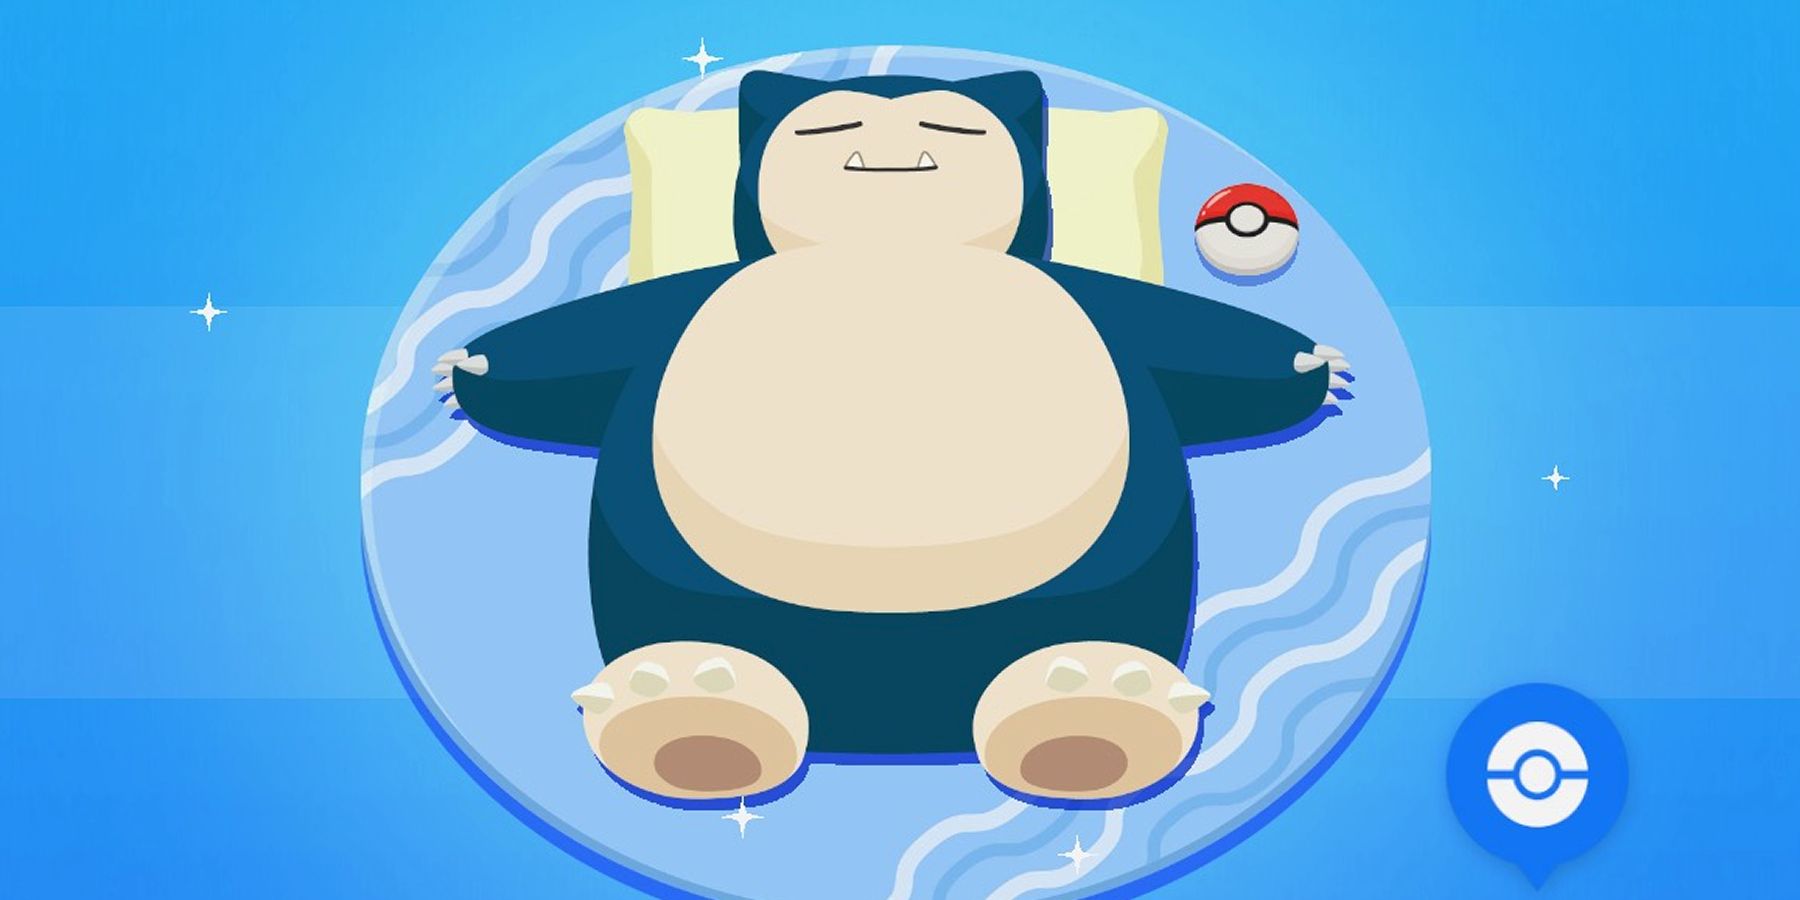 pokemon-sleep-snorlax-exerting-drowsy-power